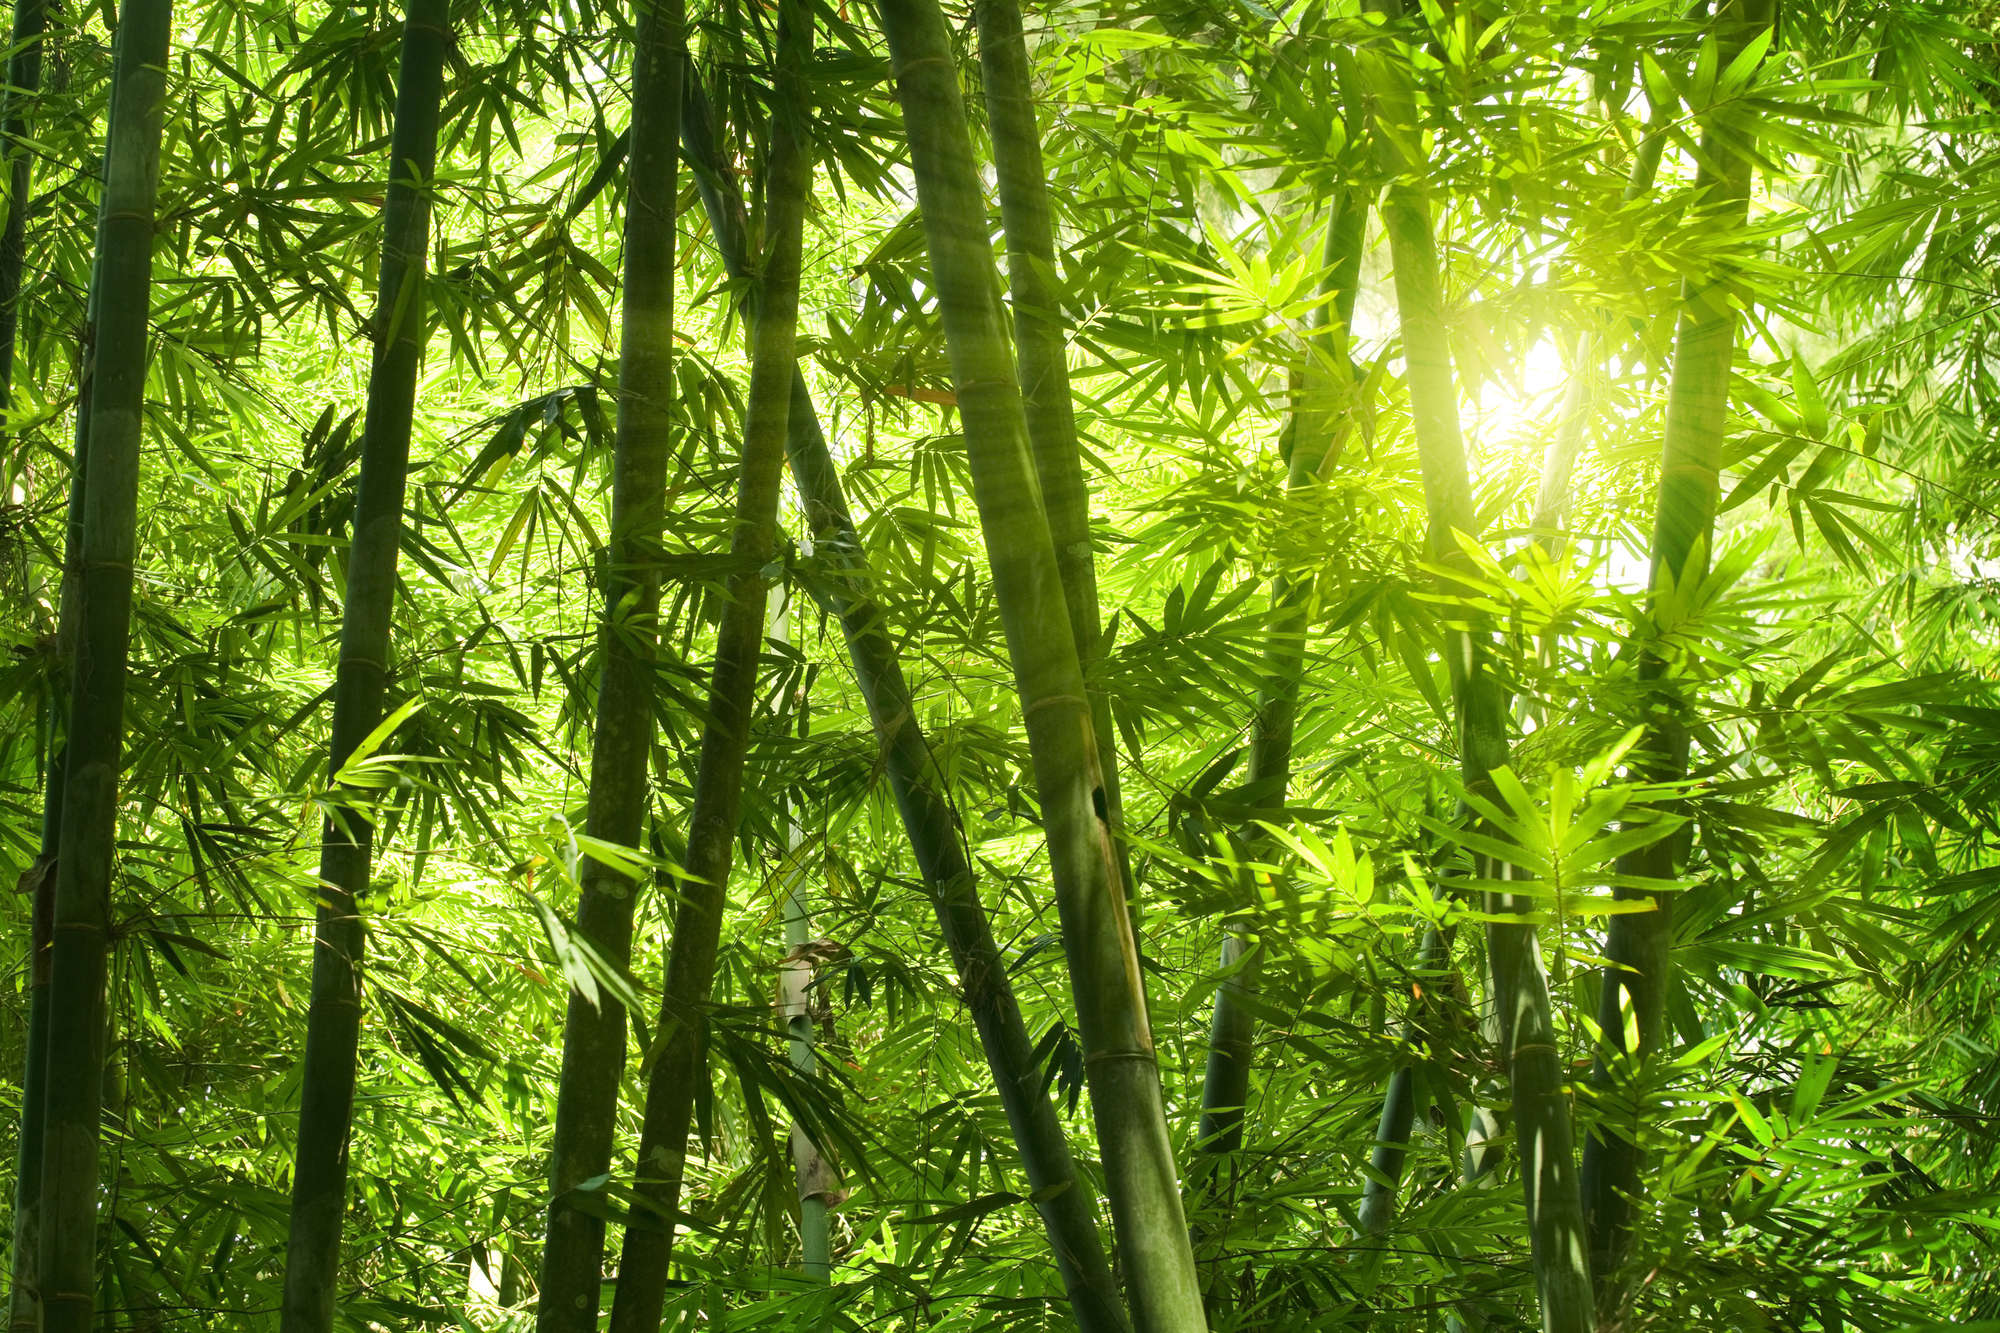             Nature wall mural bamboo forest motif on matt smooth non-woven
        